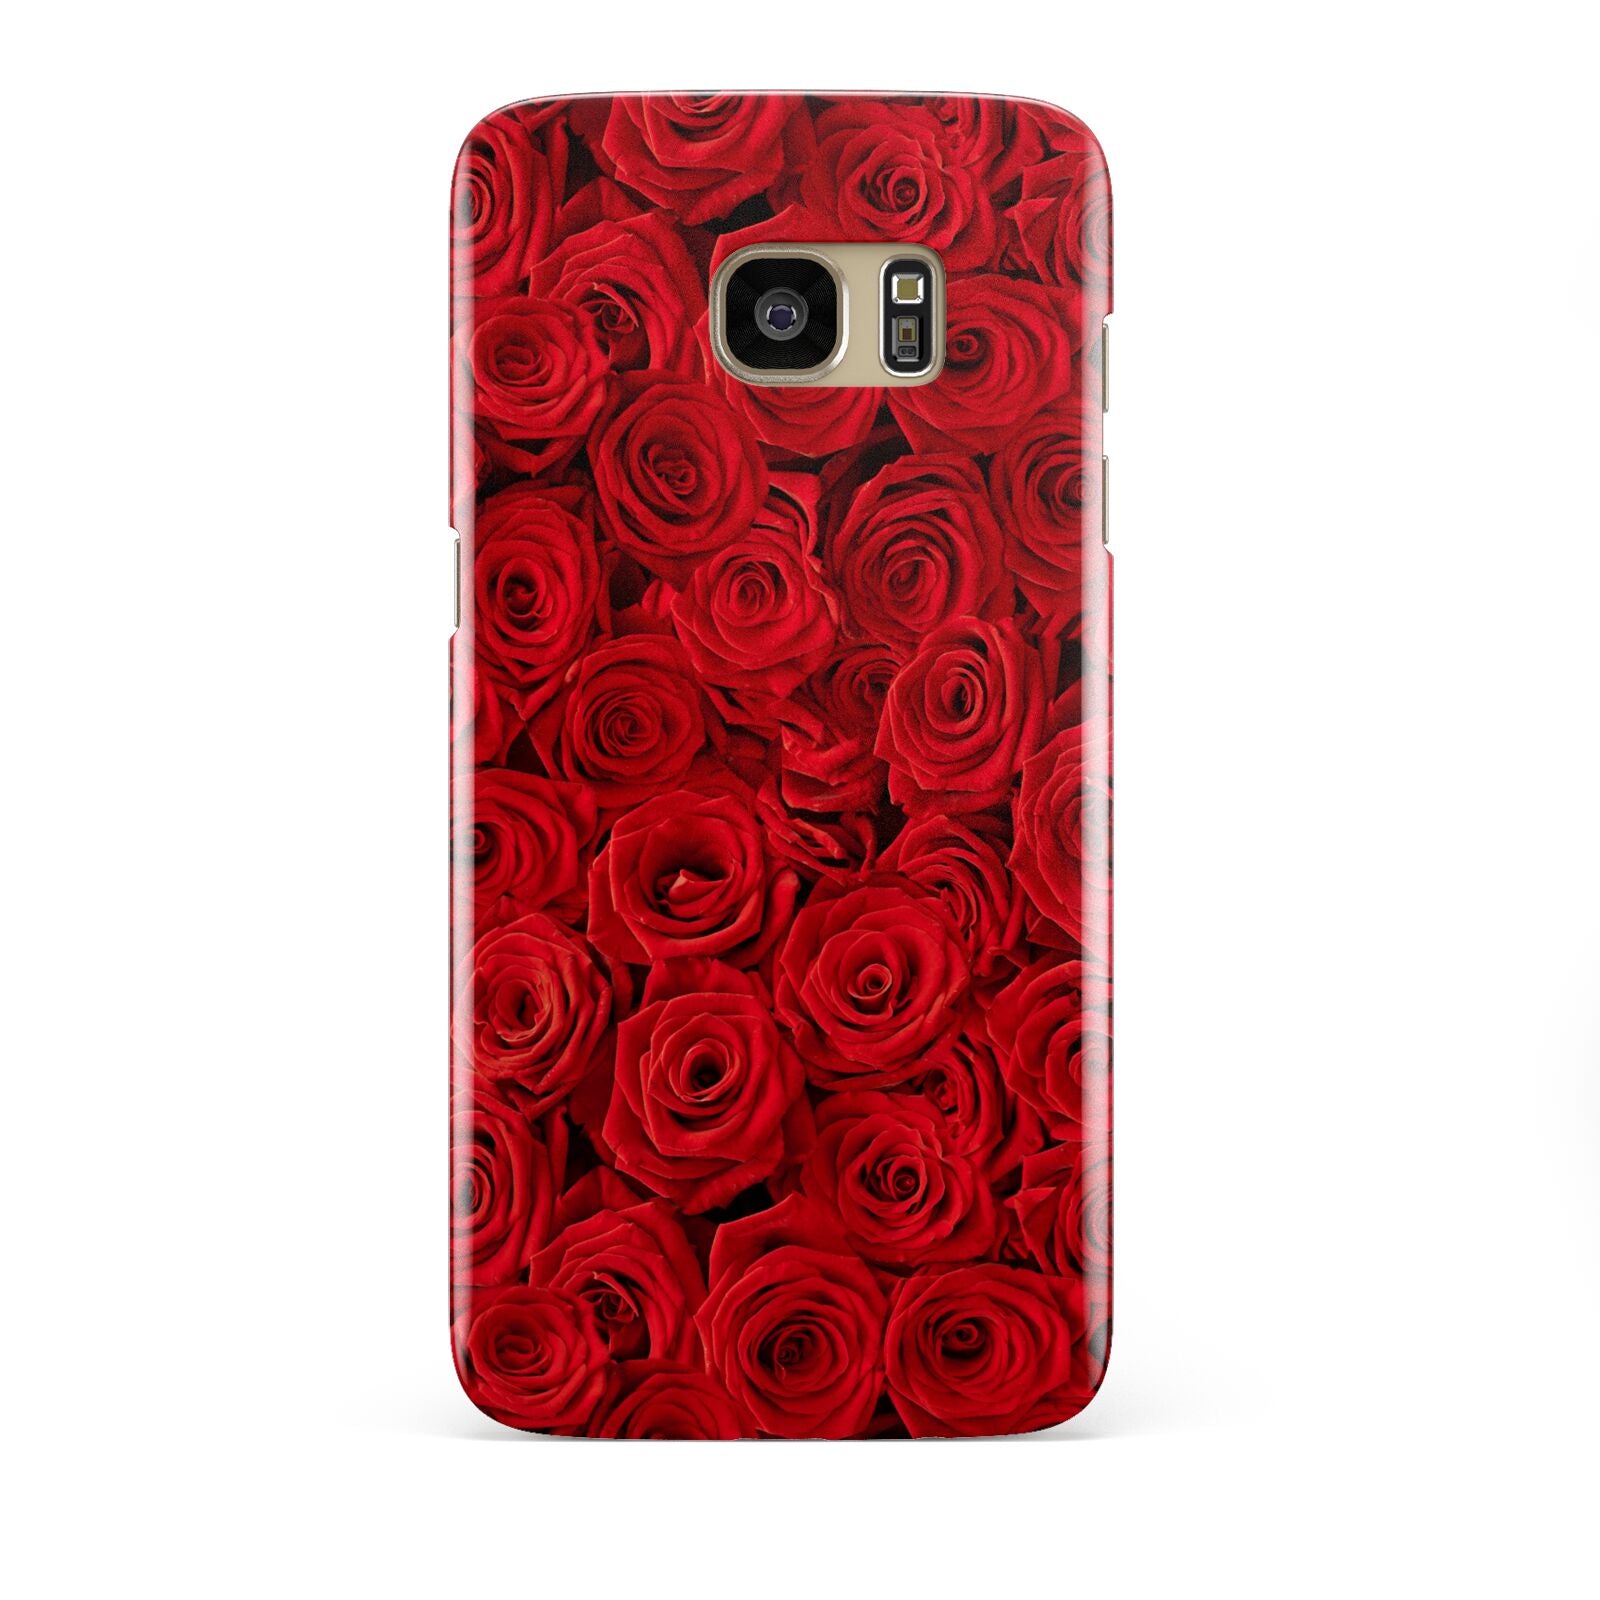 Red Rose Samsung Galaxy S7 Edge Case